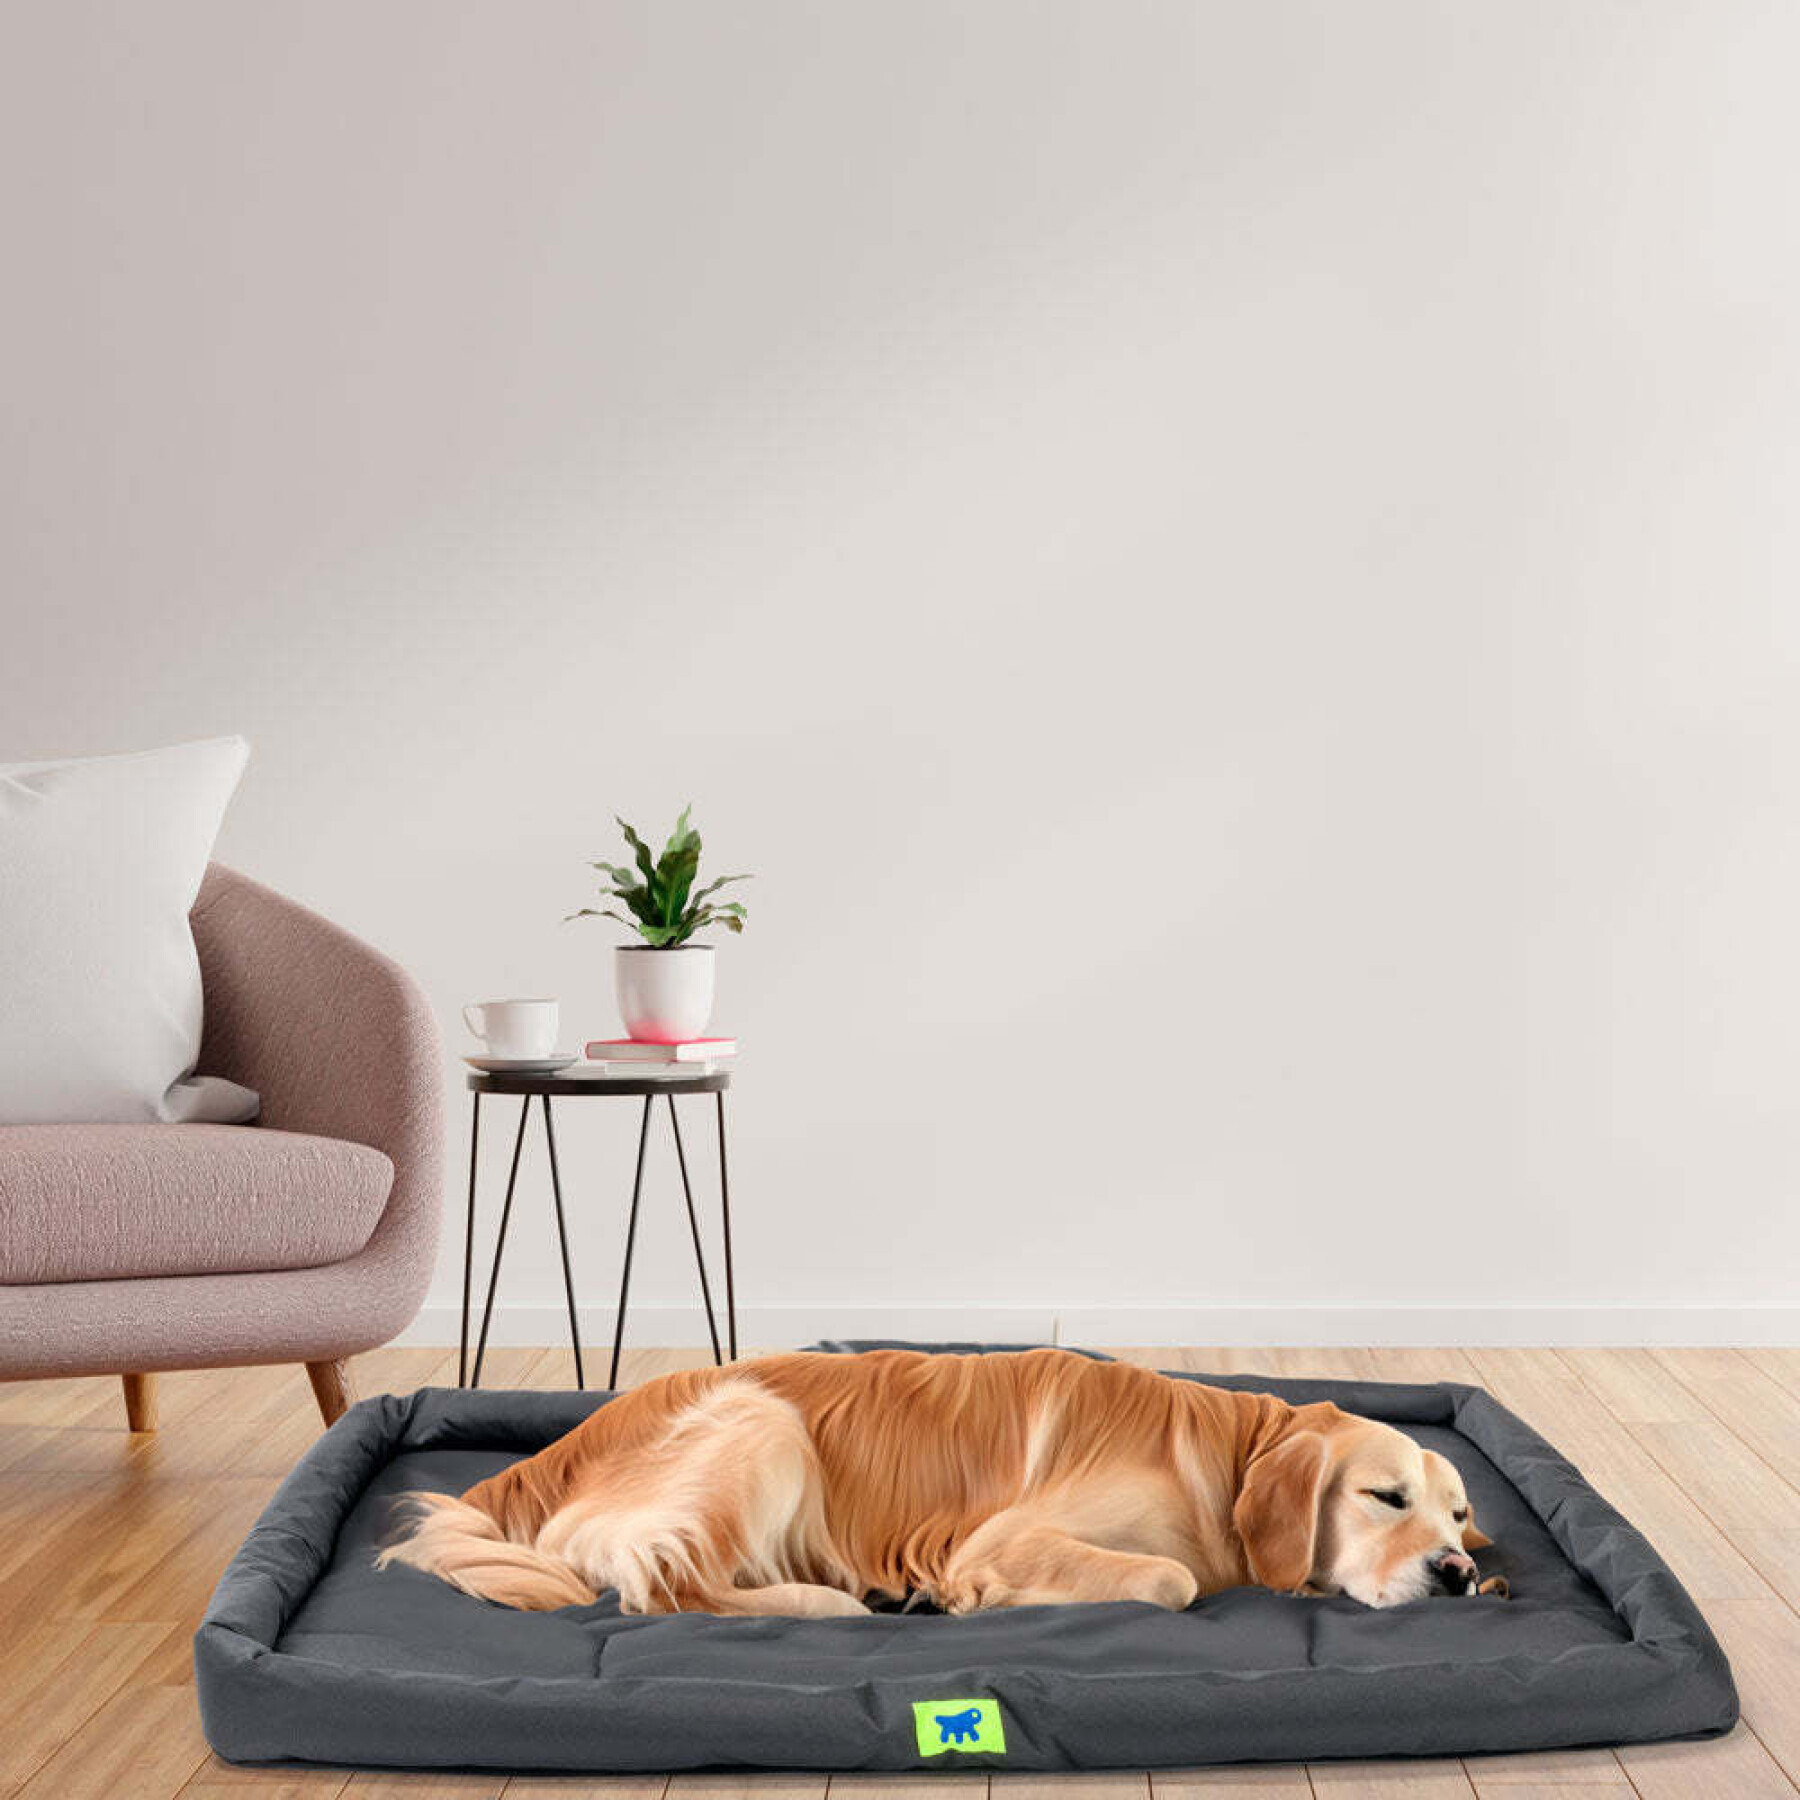 Cushion for dog Ferplast Tender Tech 105